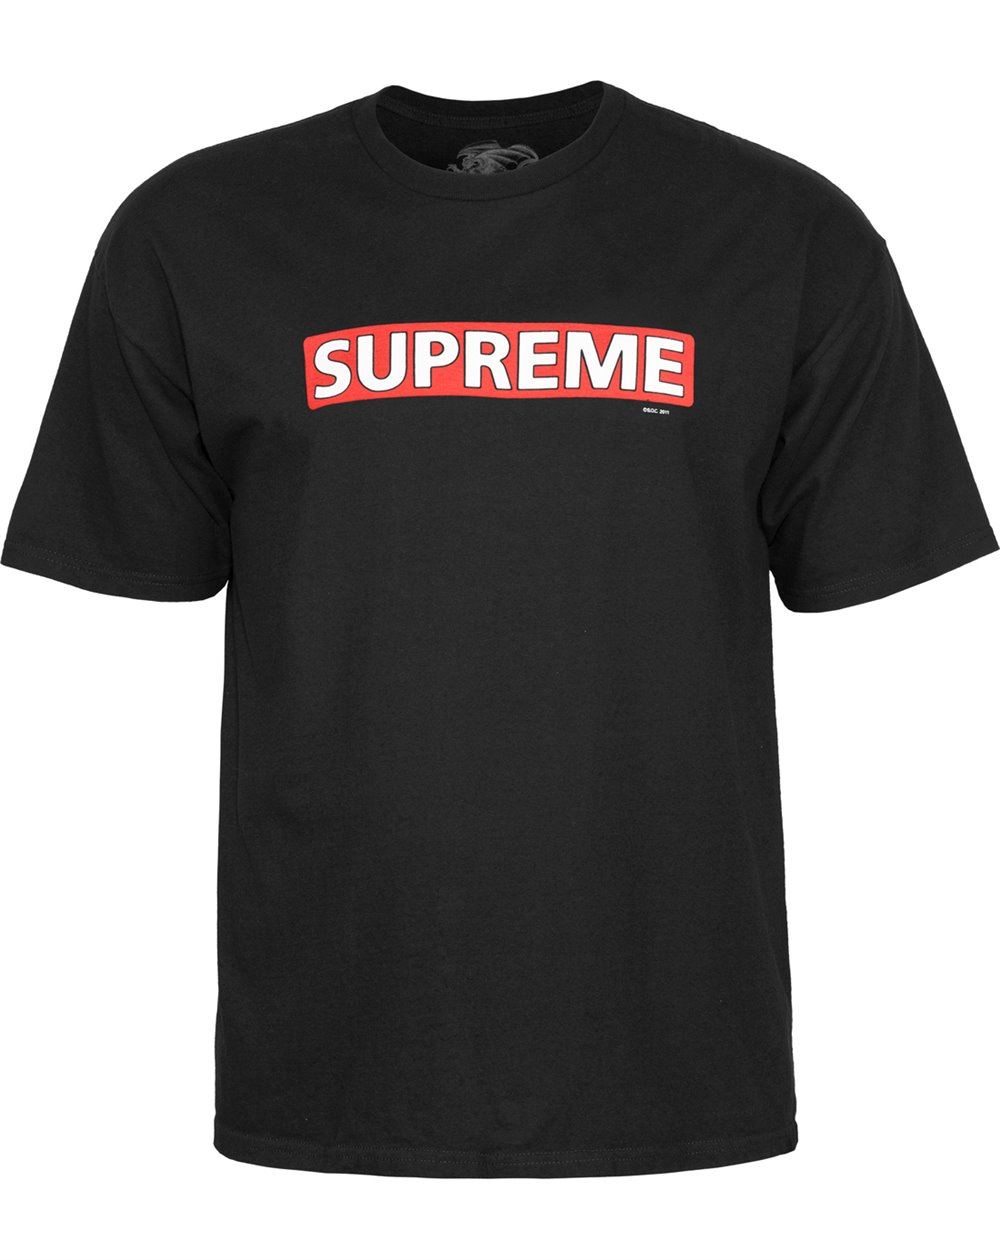 Supreme Camiseta Hombre Black